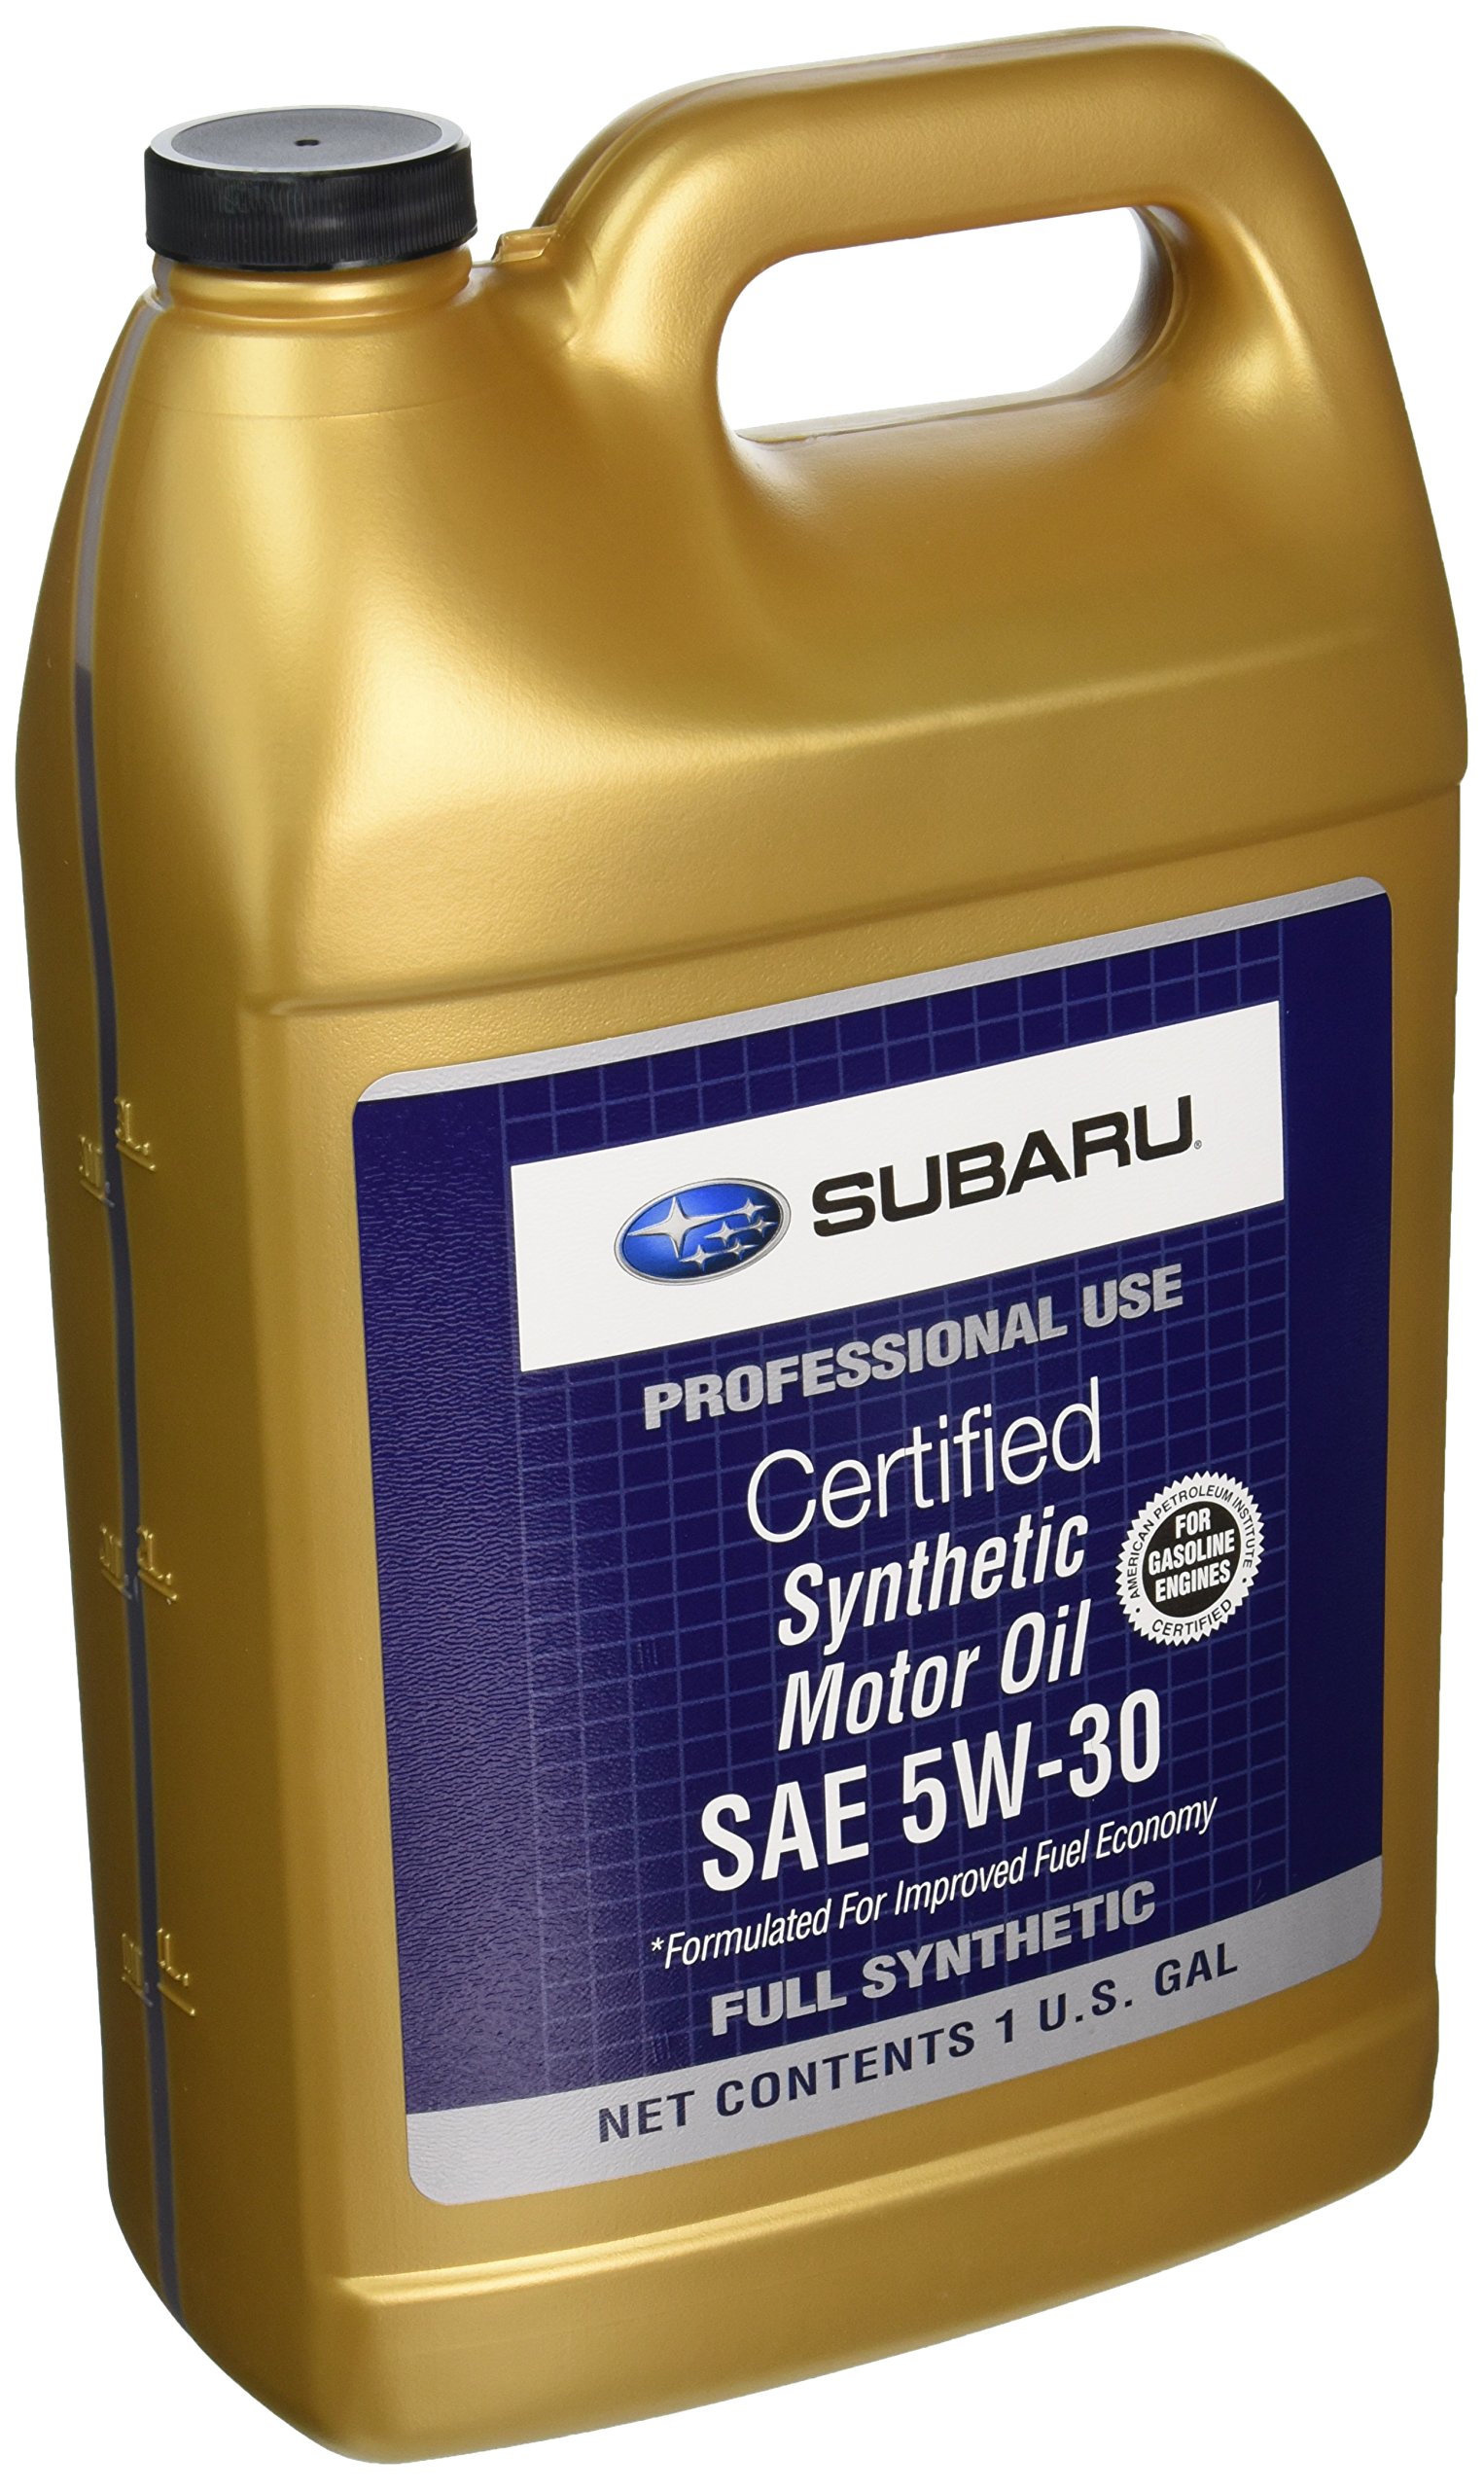 Subaru Synthetic SAE 5W-30